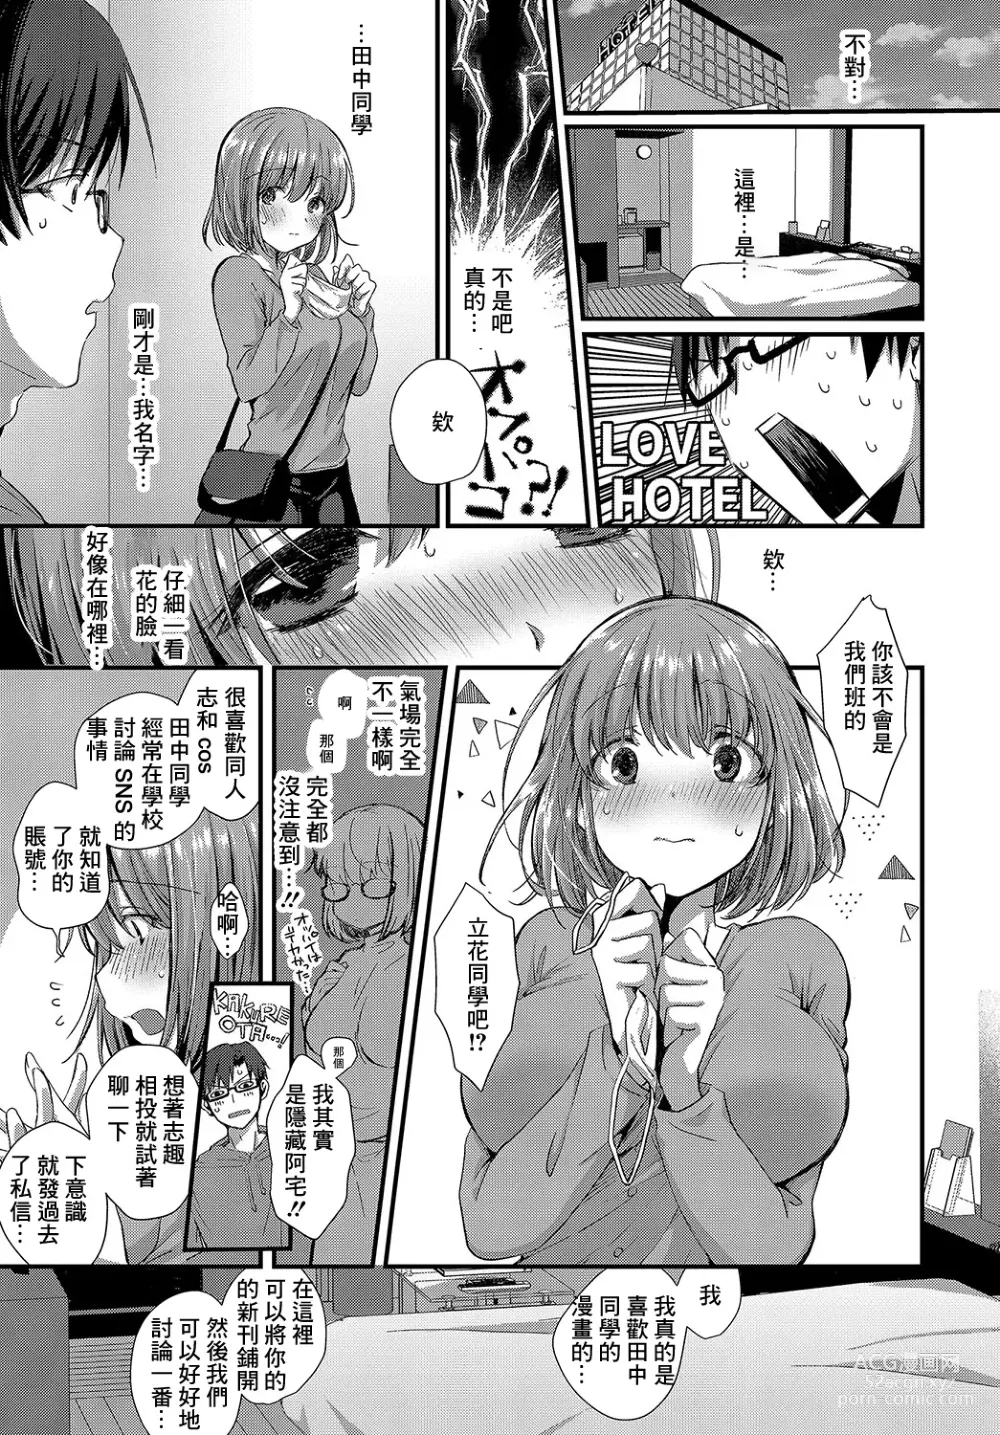 Page 5 of manga Junai Cos Maid